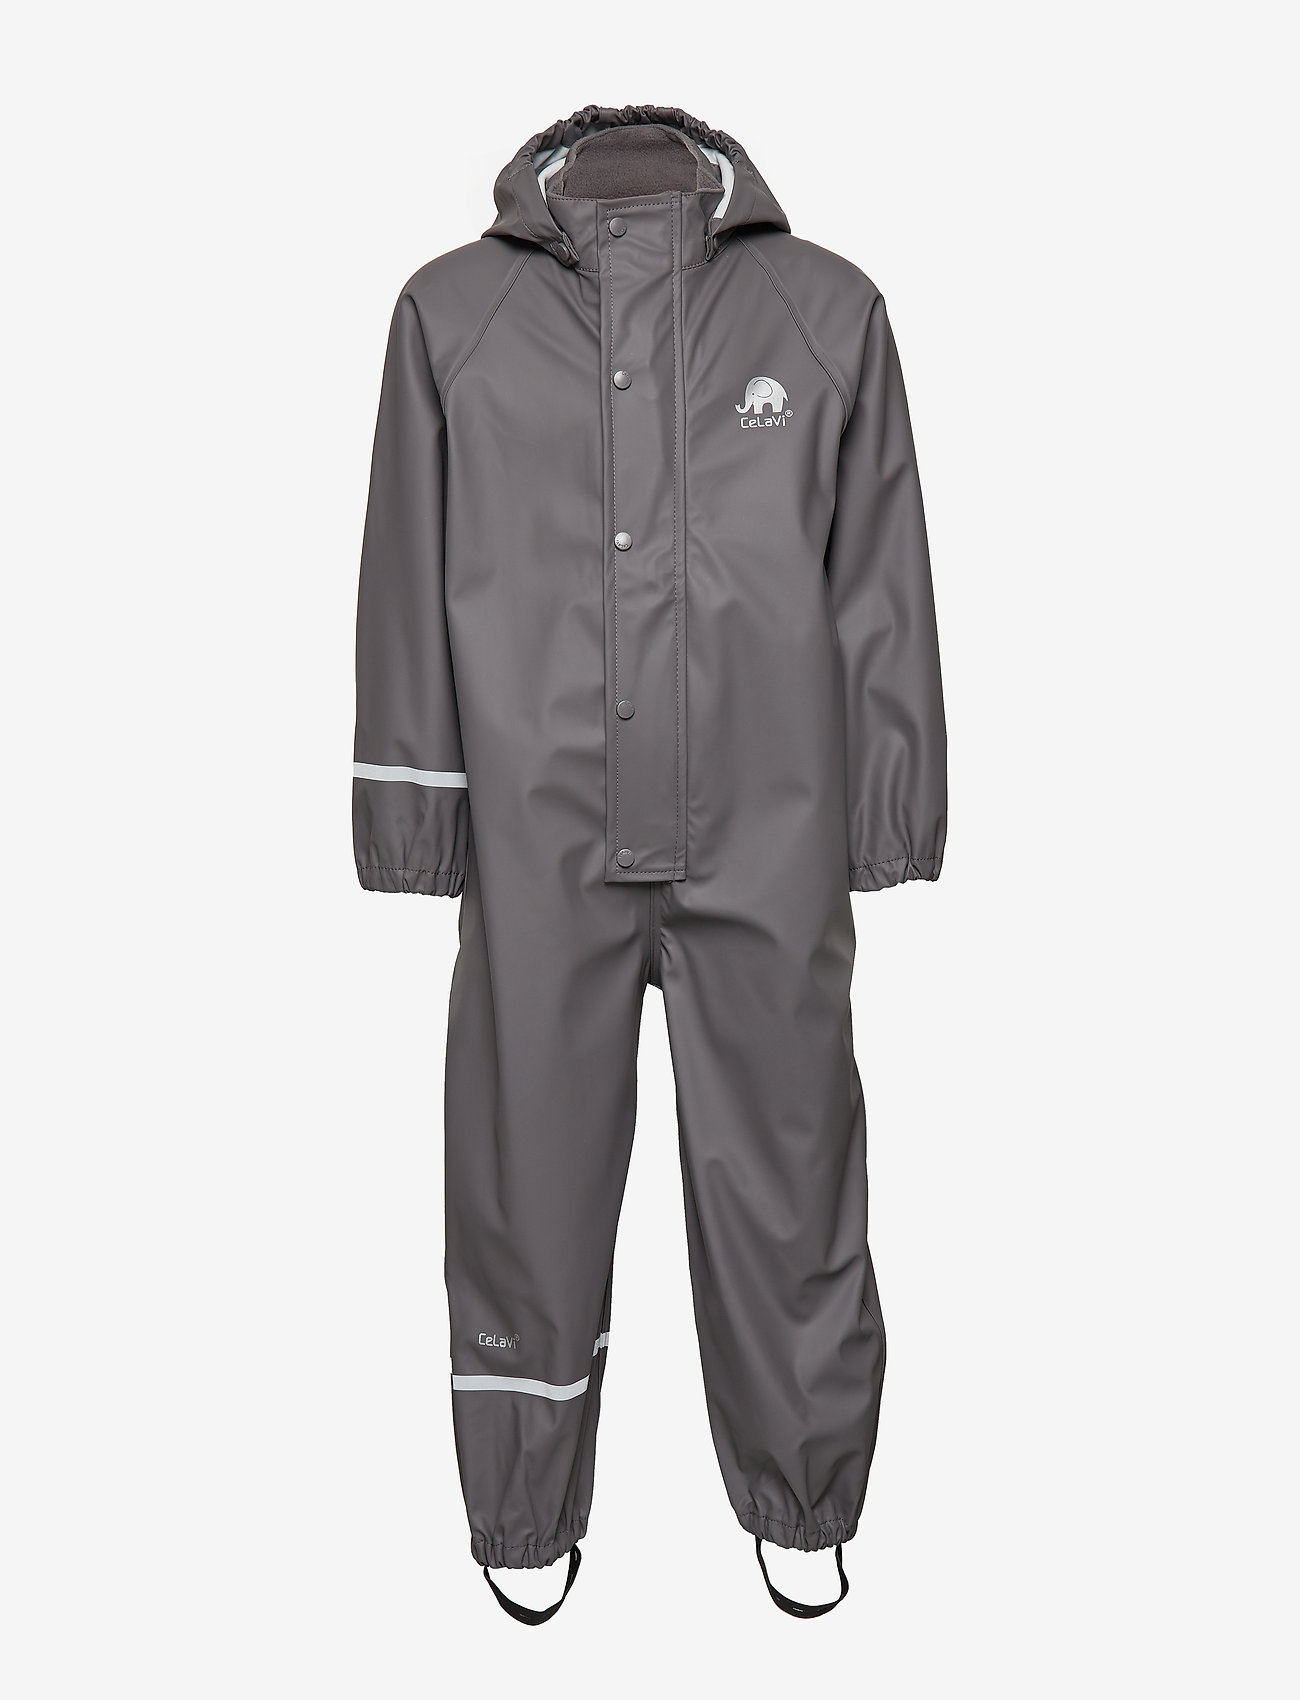 CeLaVi - Rainwear suit -Solid PU - regndress - grey - 1